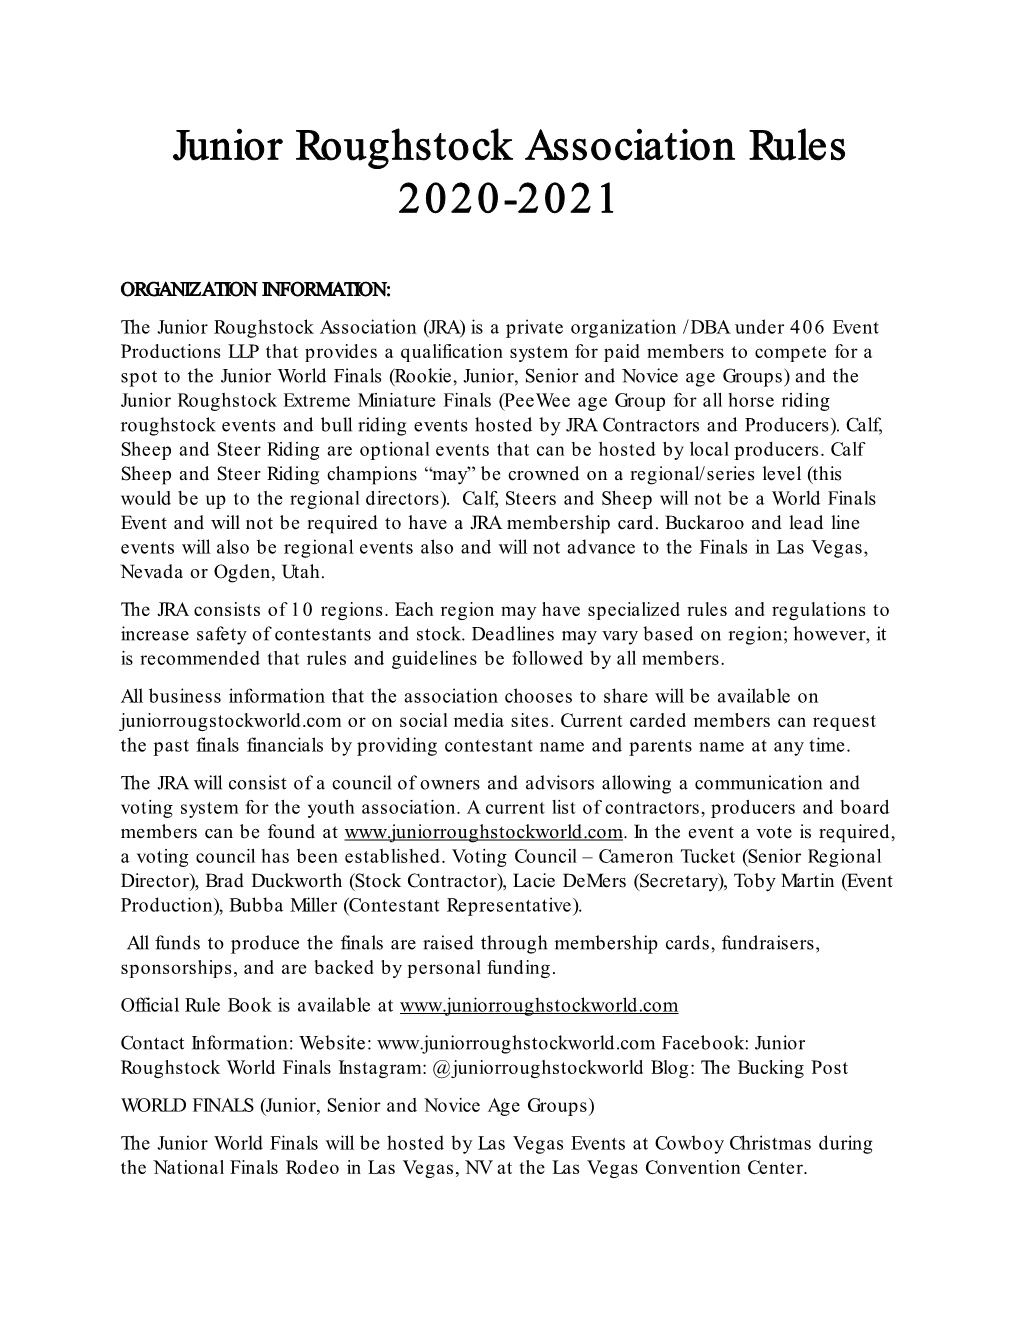 Junior Roughstock Association Rules 2020-2021